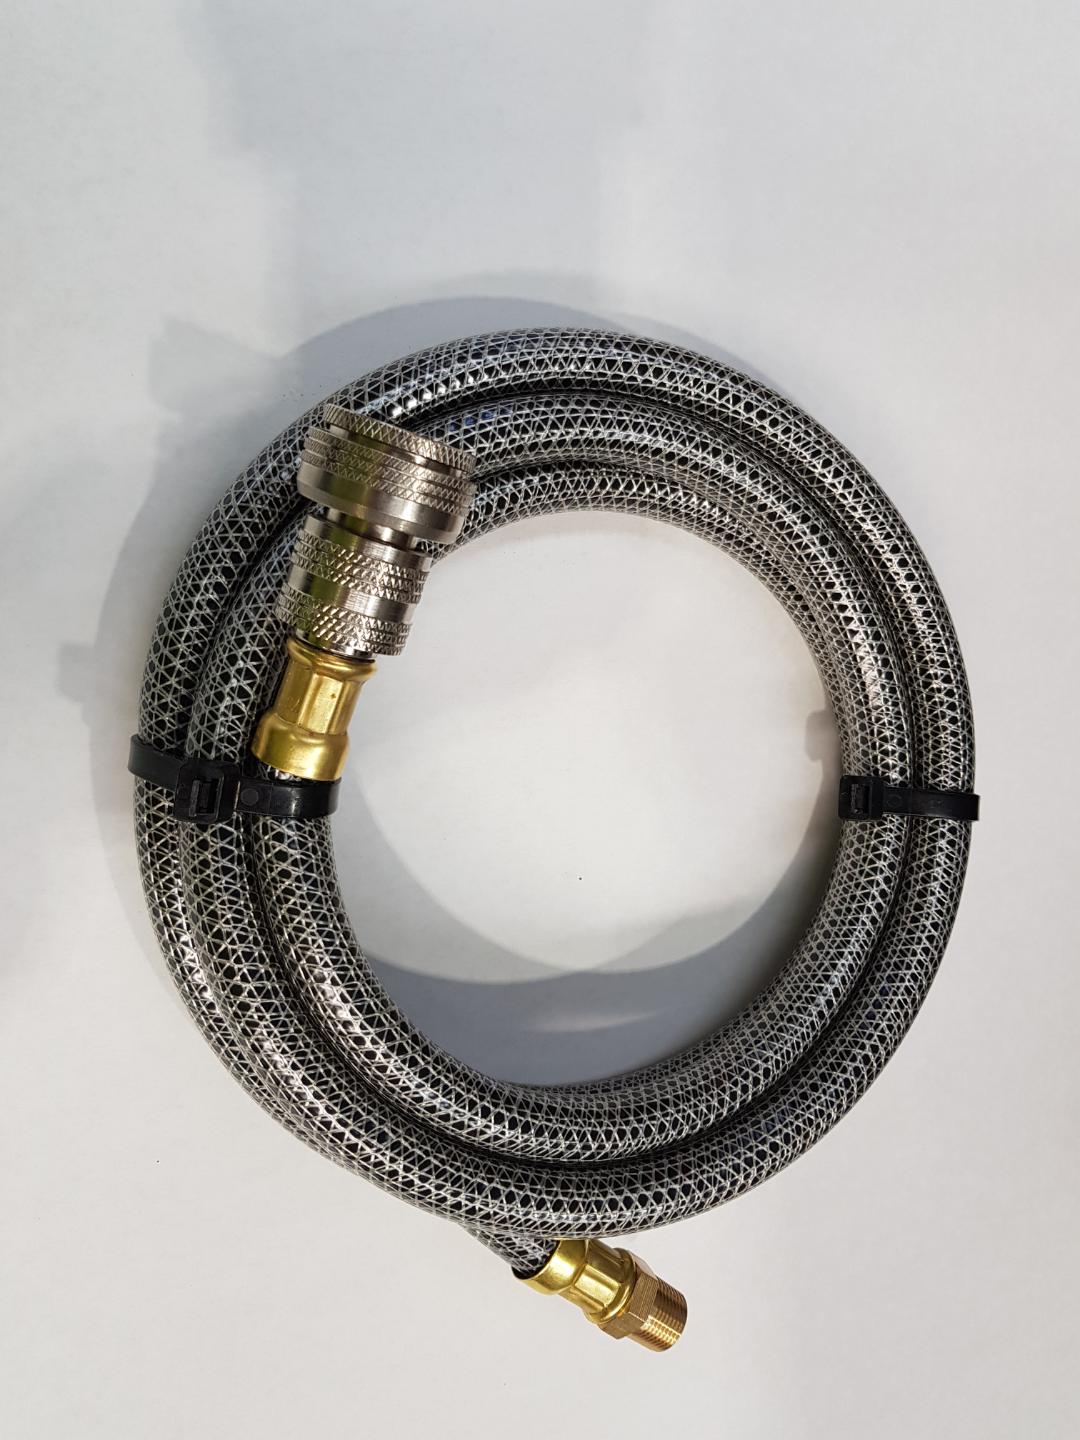 1.0M Garden reel connector hose